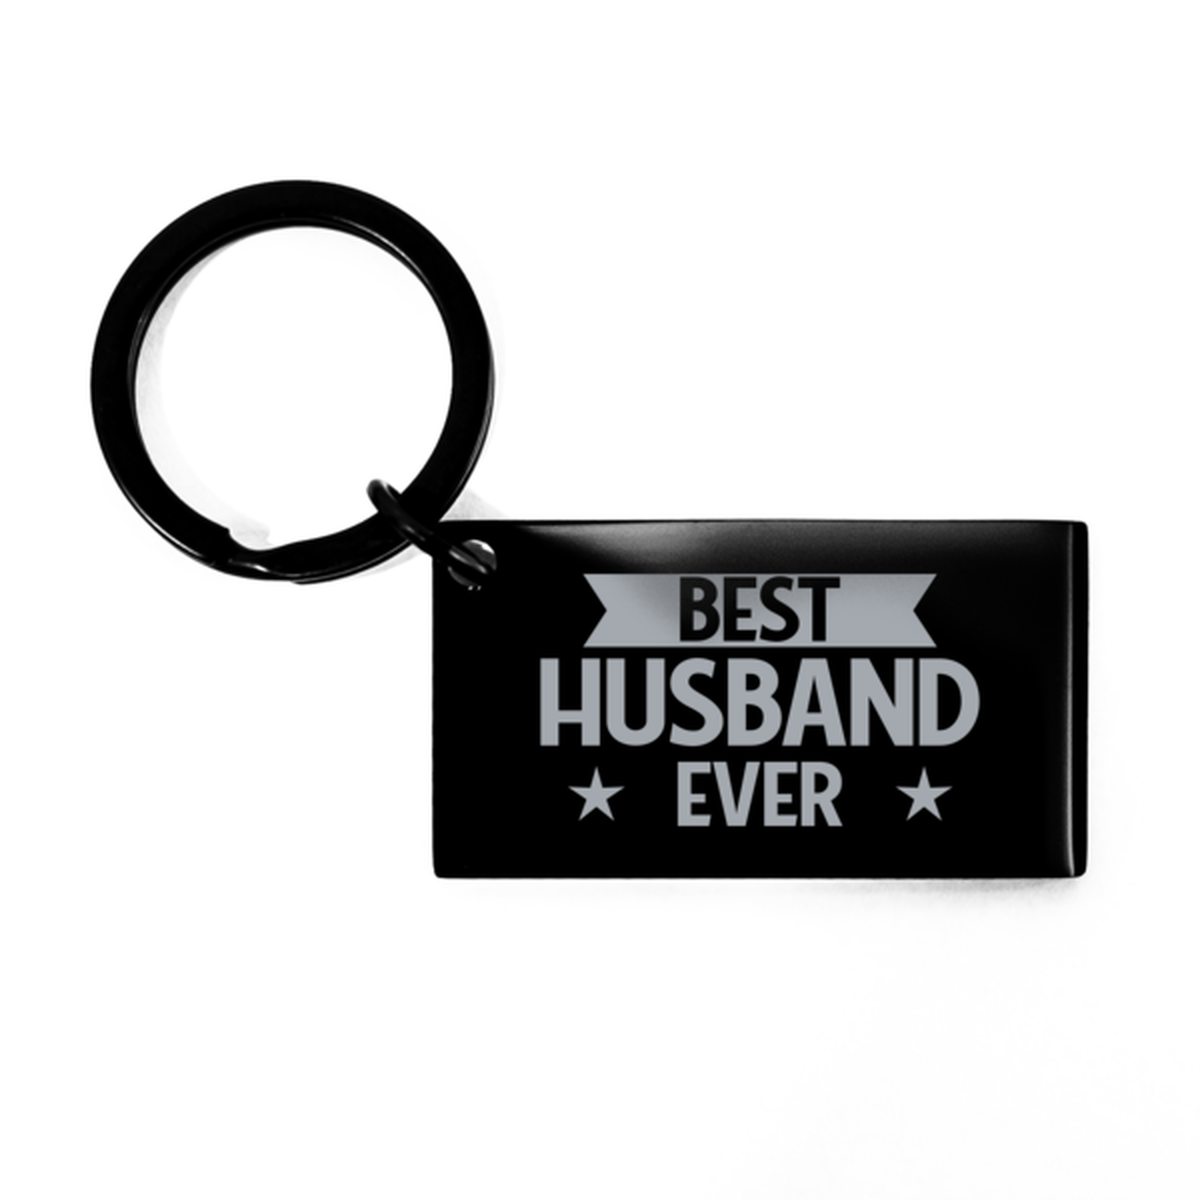 Best Husband Ever Husband Gifts, Funny Black Keychain For Husband, Birthday Engraved Keyring Presents For Men